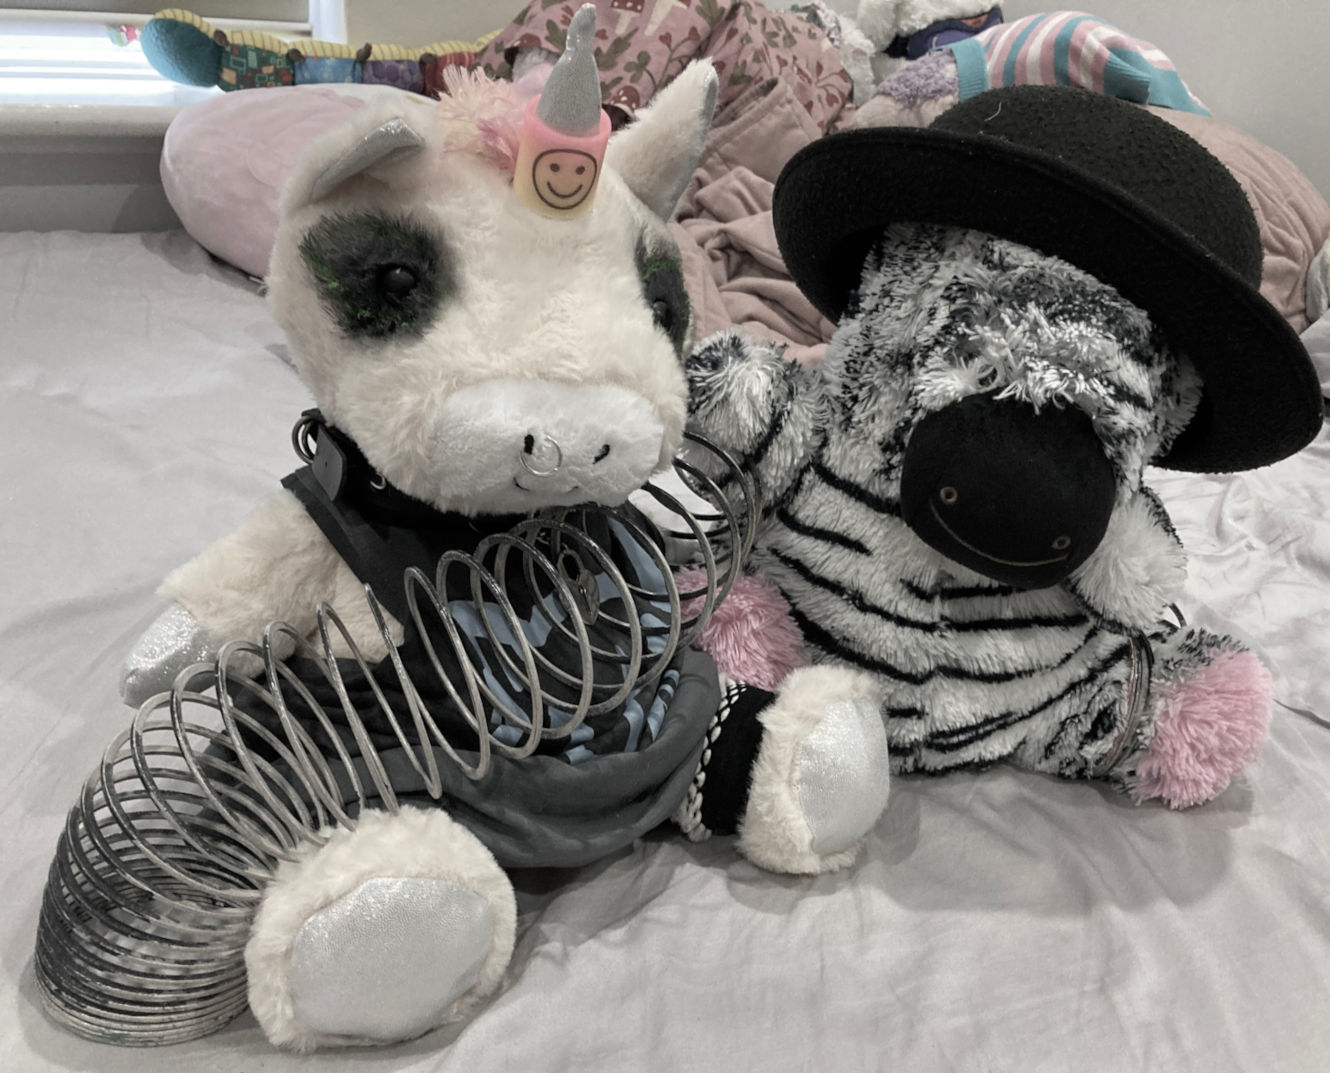 E-girl unicorn and zebra plushies playing with black and white slinky. Zebra wearing bowler hat.